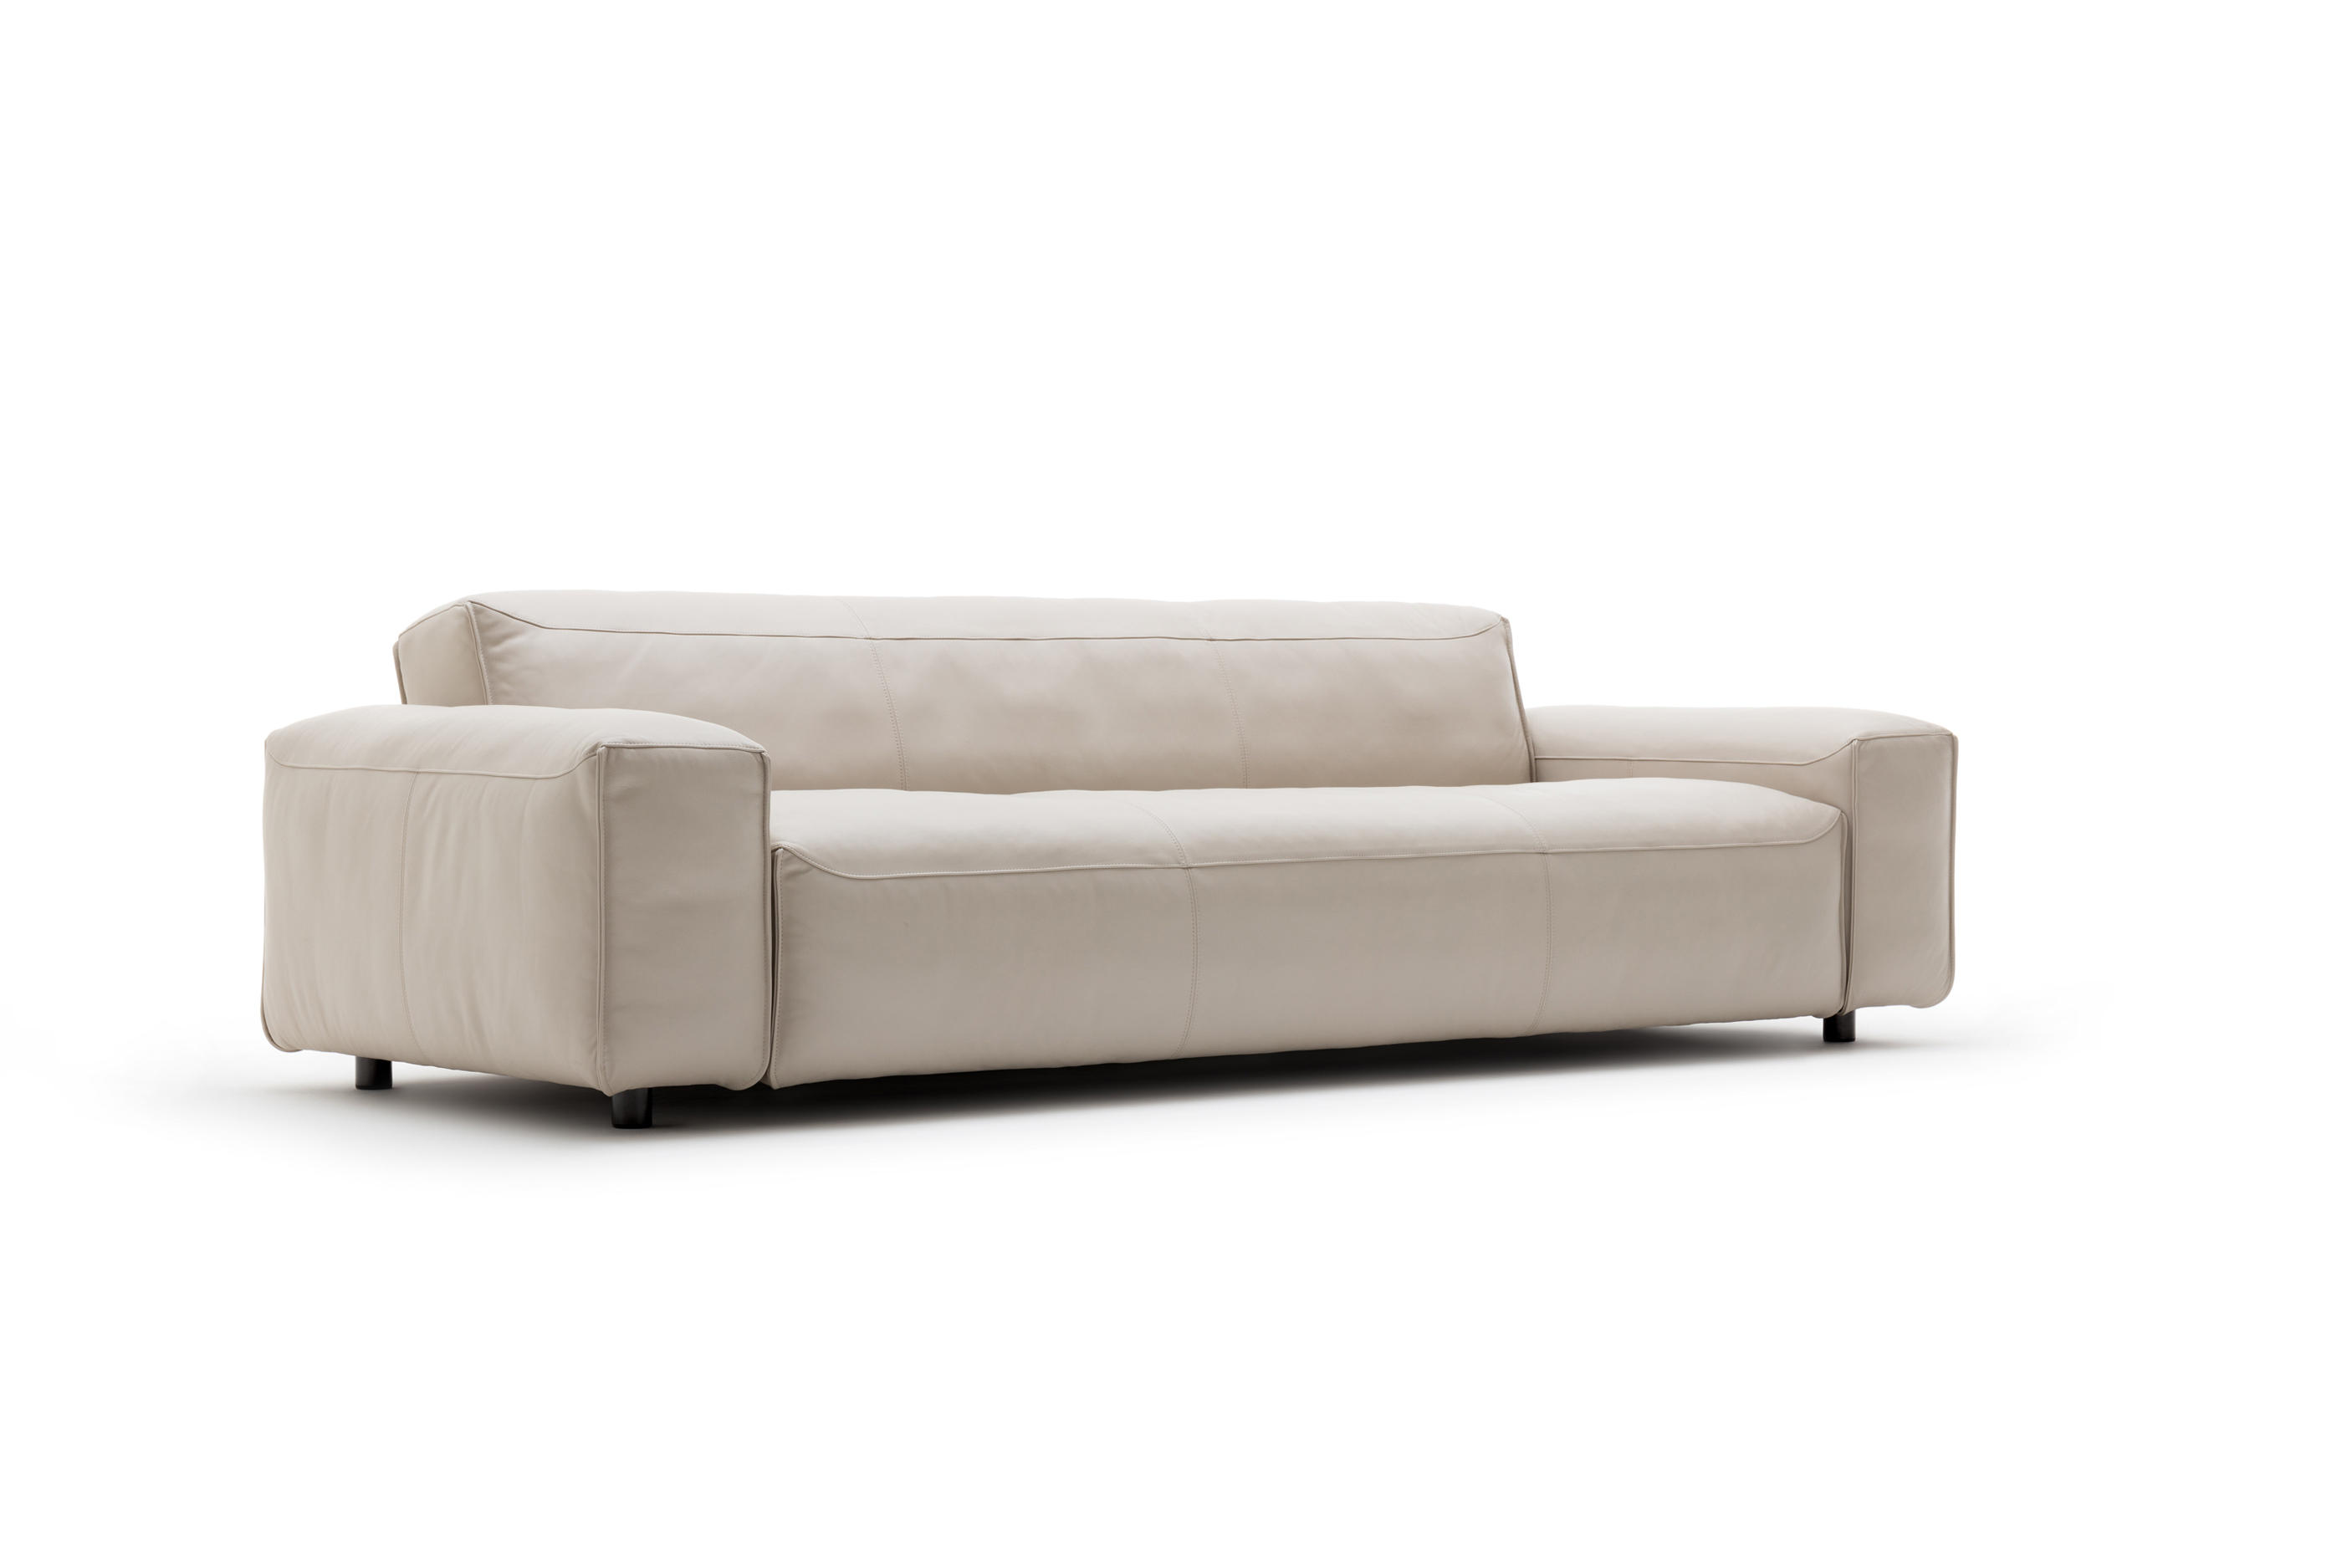 prins wervelkolom Guinness Rolf Benz 552 MIO & designer furniture | Architonic